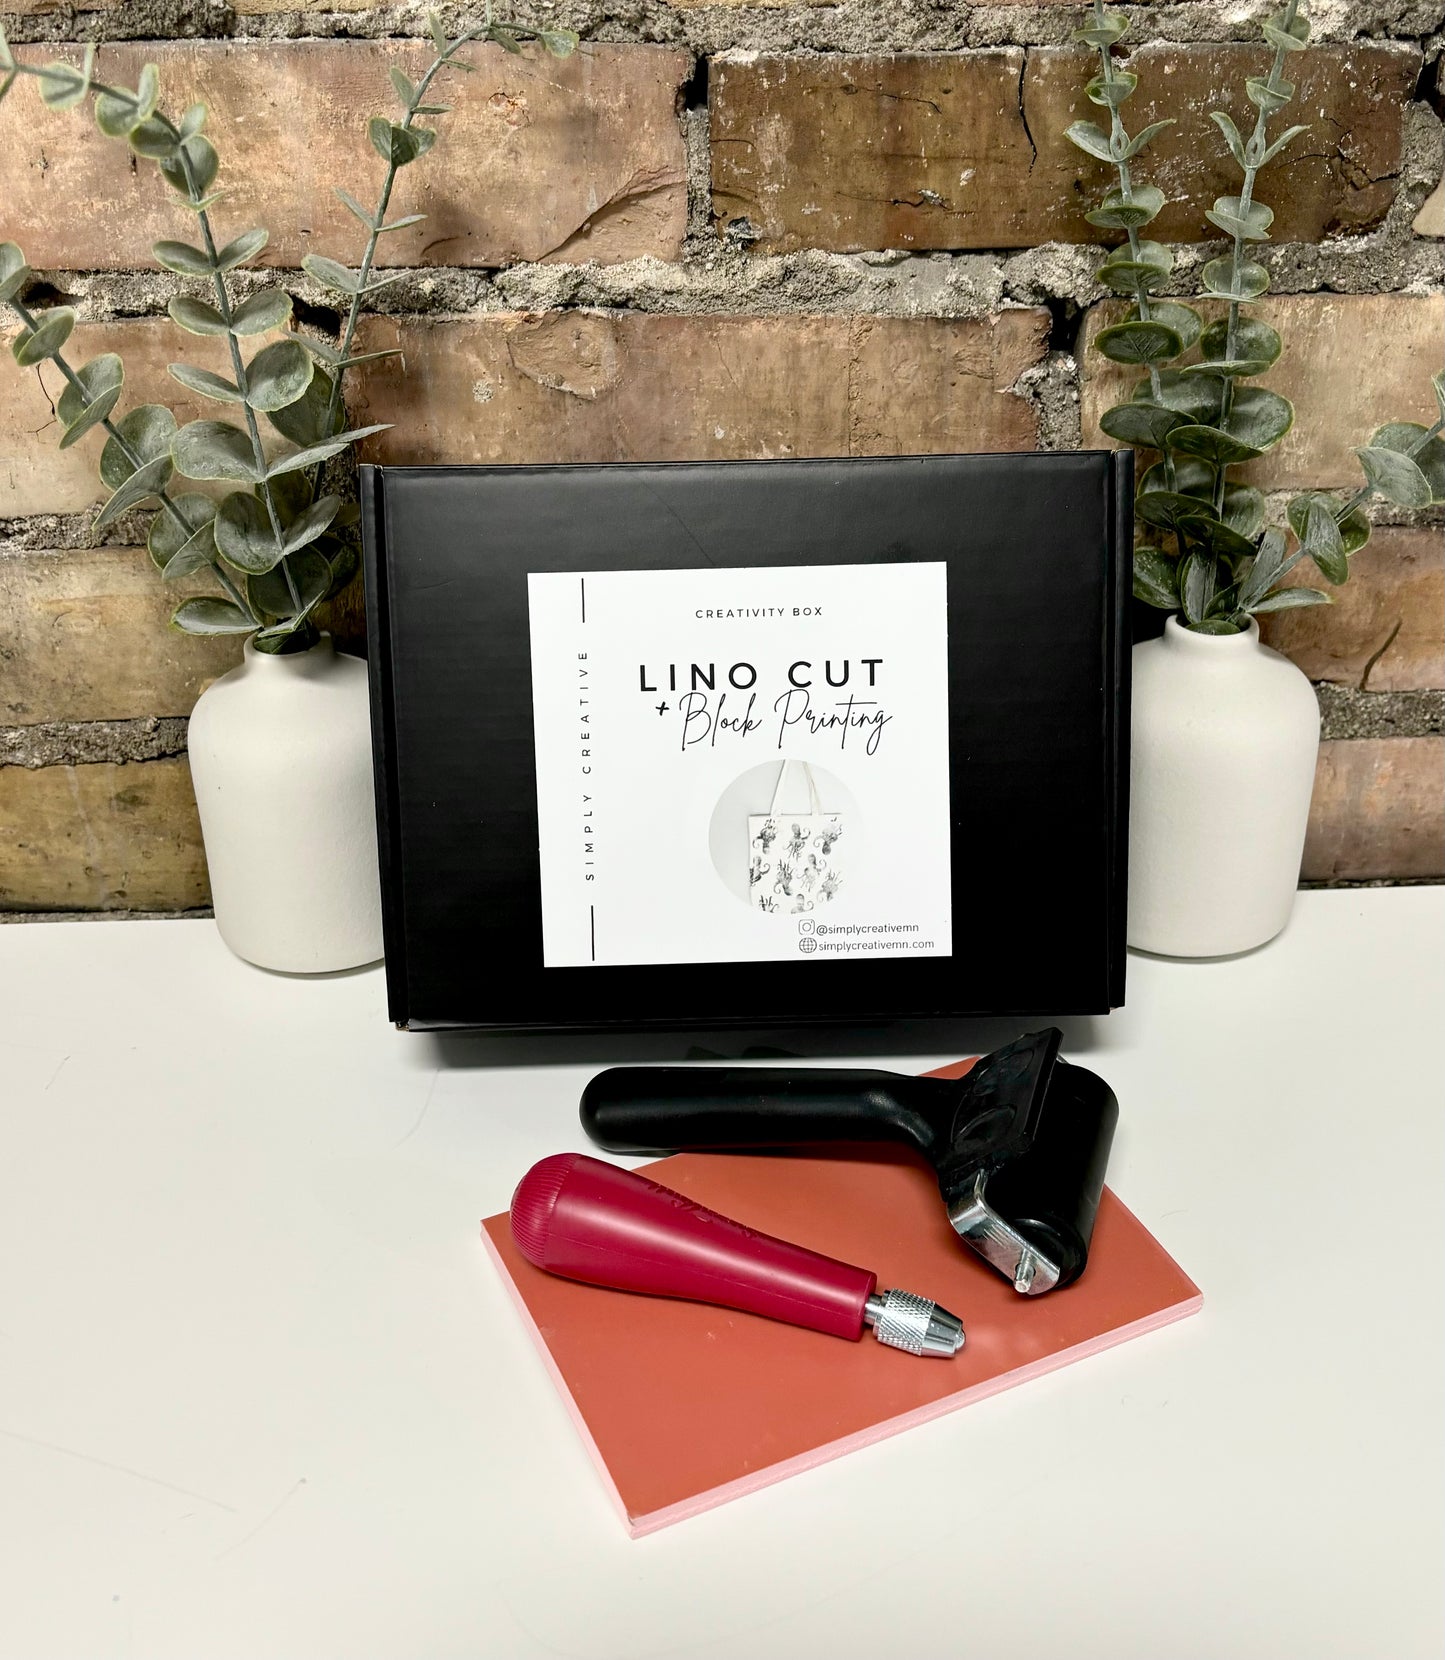 Lino Cut & Block Printing Premium Creativity Box